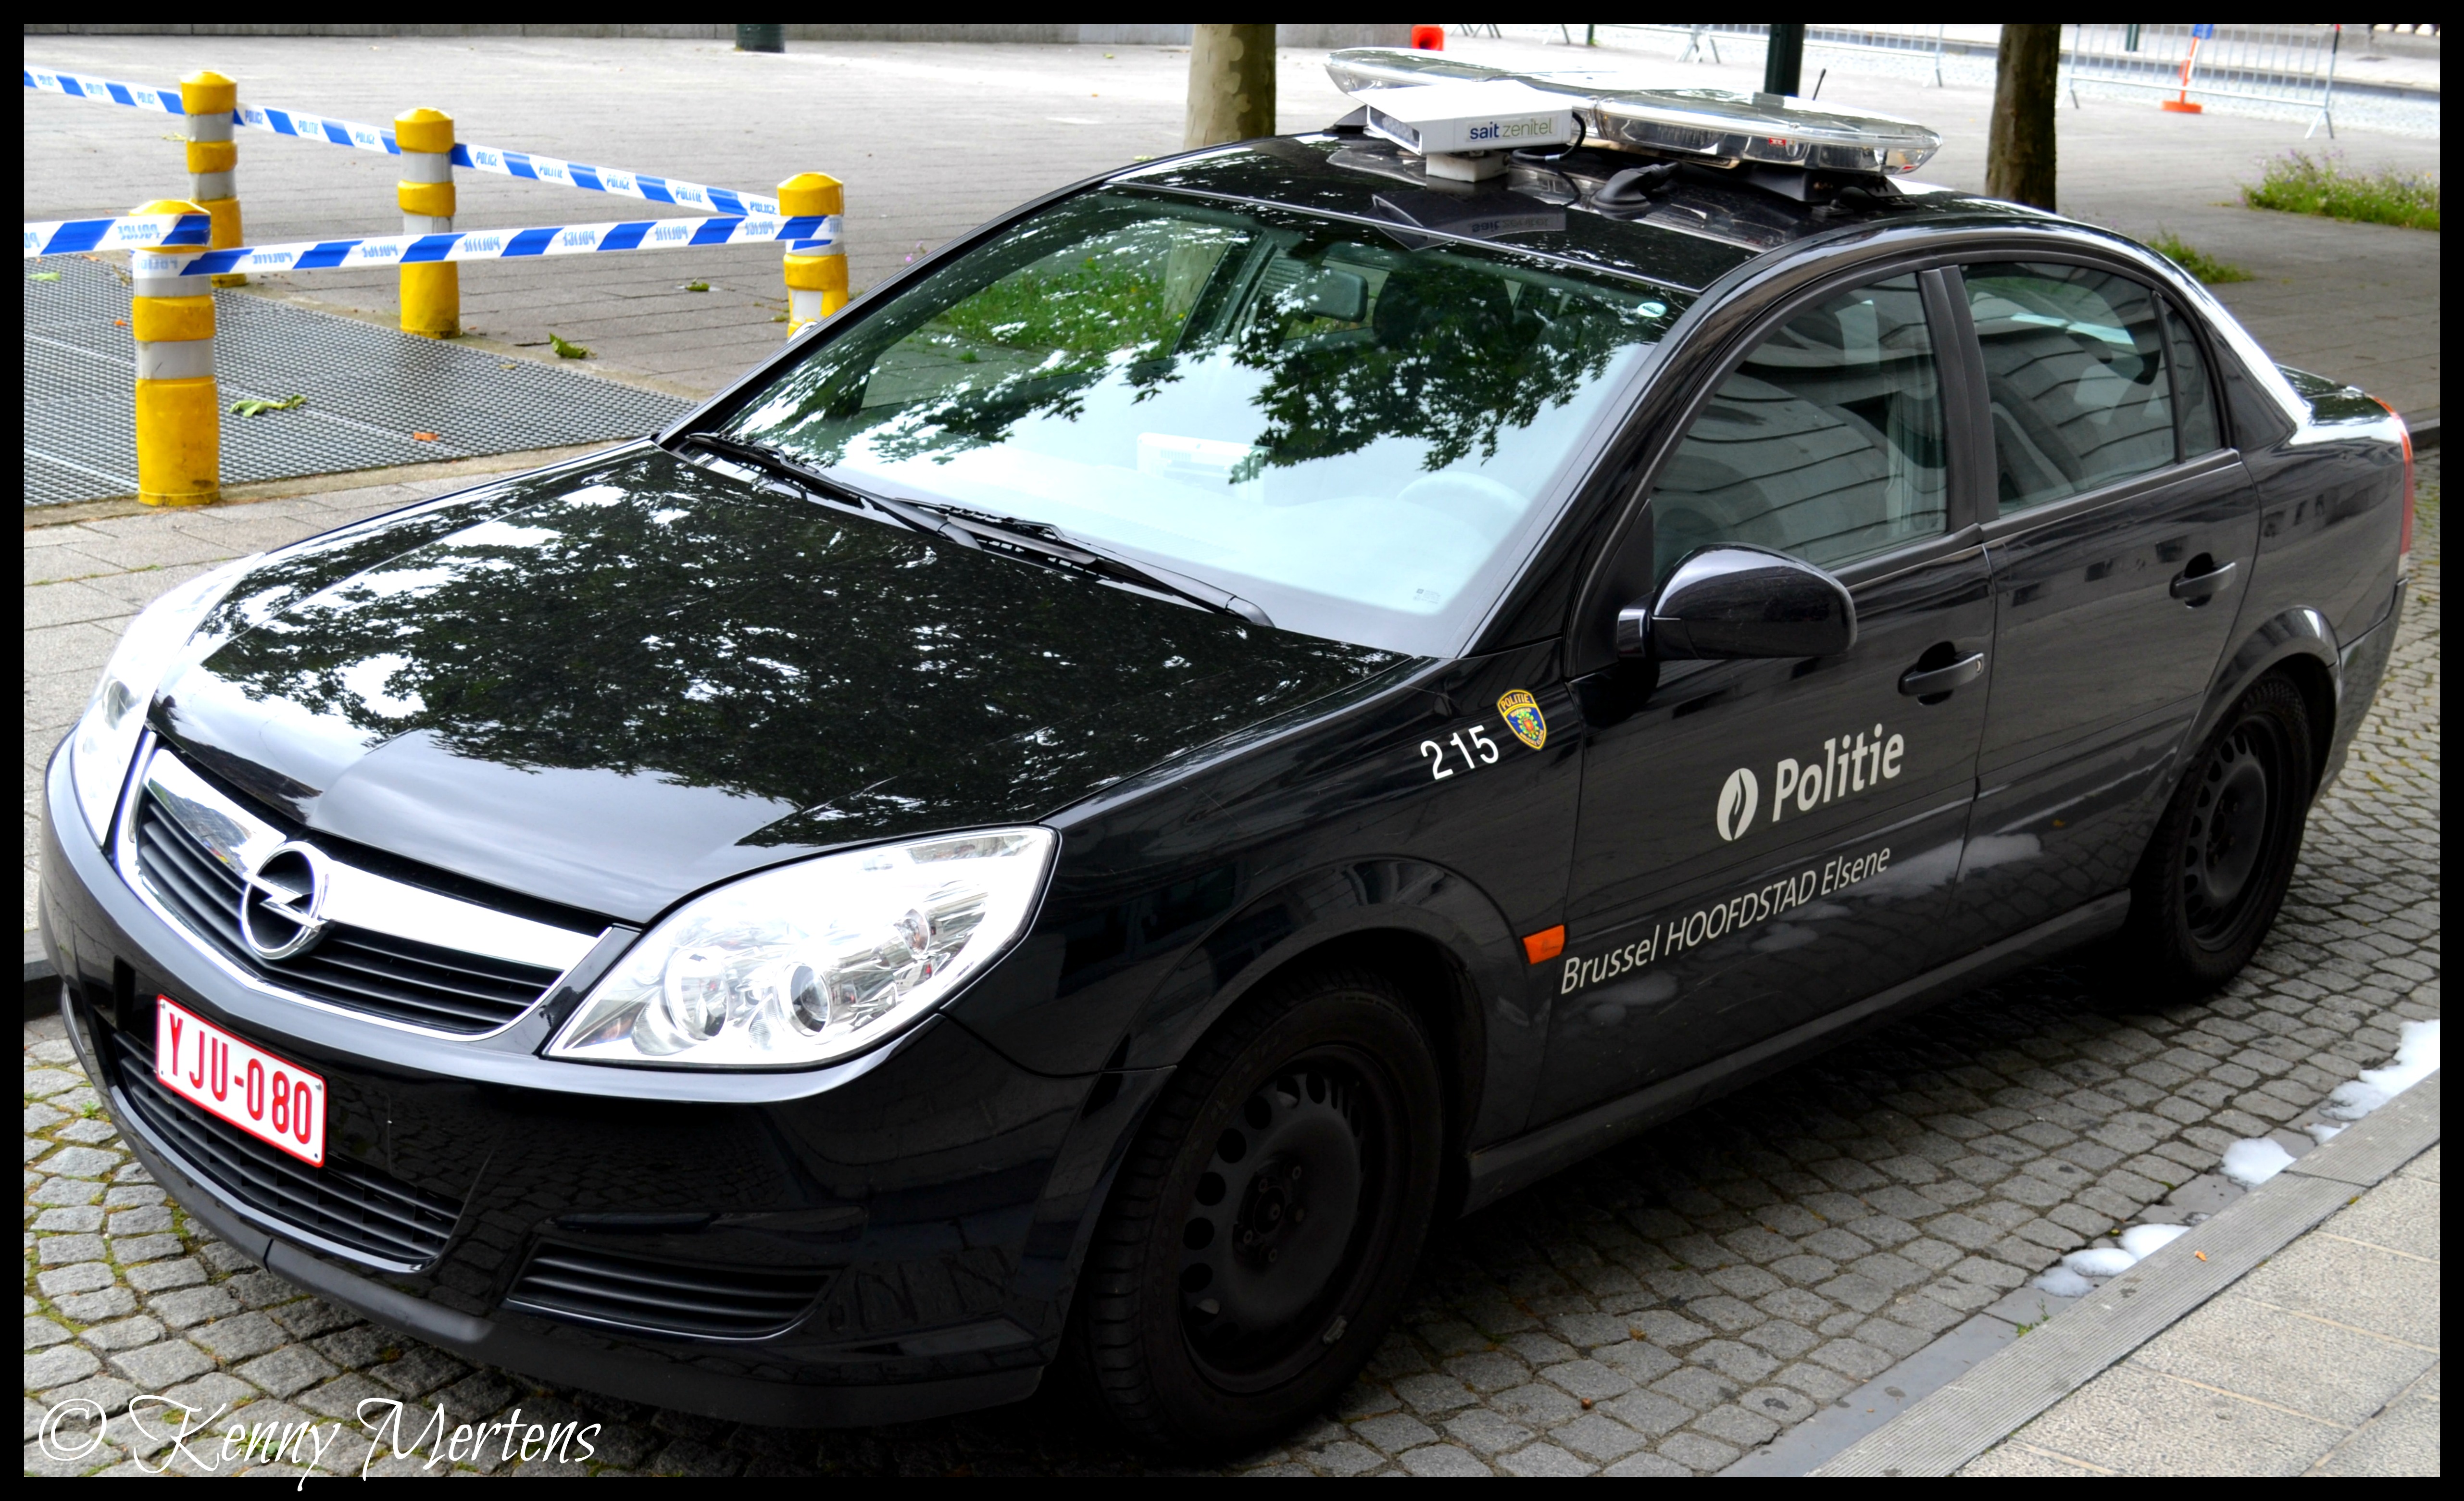 Zone de police Bruxelles Capitale Ixelles (ZP 5339 - PolBru) - Page 3 14643359860_7056f856d7_o